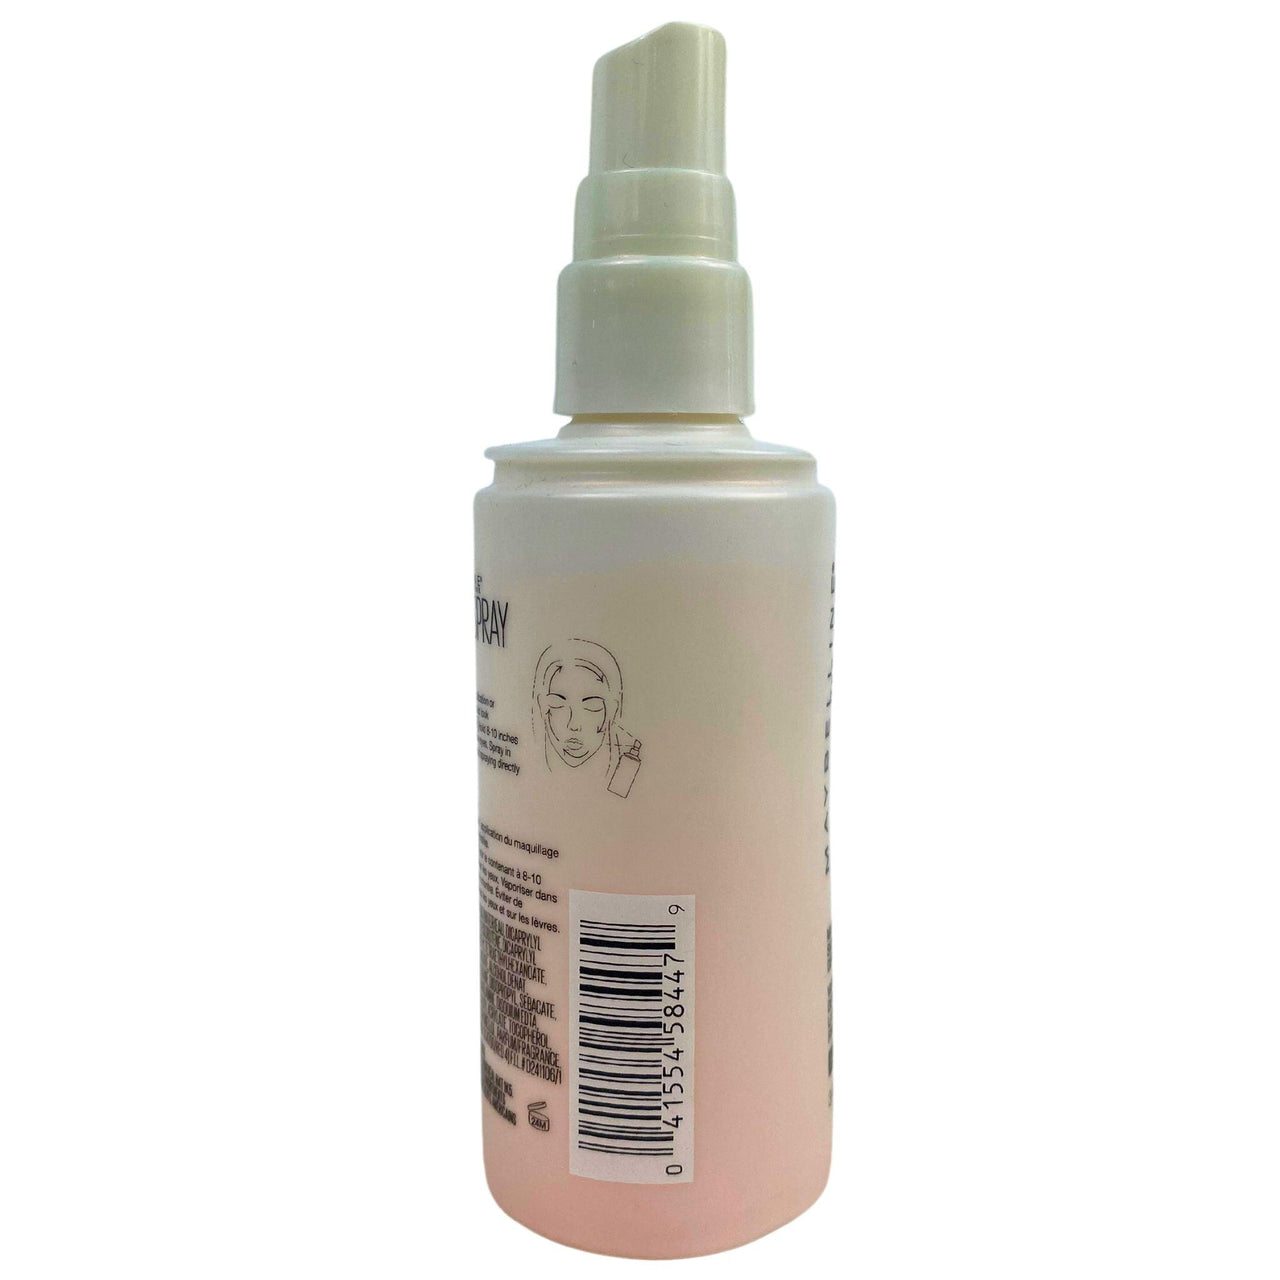 Maybelline Glass Spray Make-up Finishing Spray Skin Looks Hydrated Dewy Finish 3.4oz (70 Pcs Lot) - Discount Wholesalers Inc